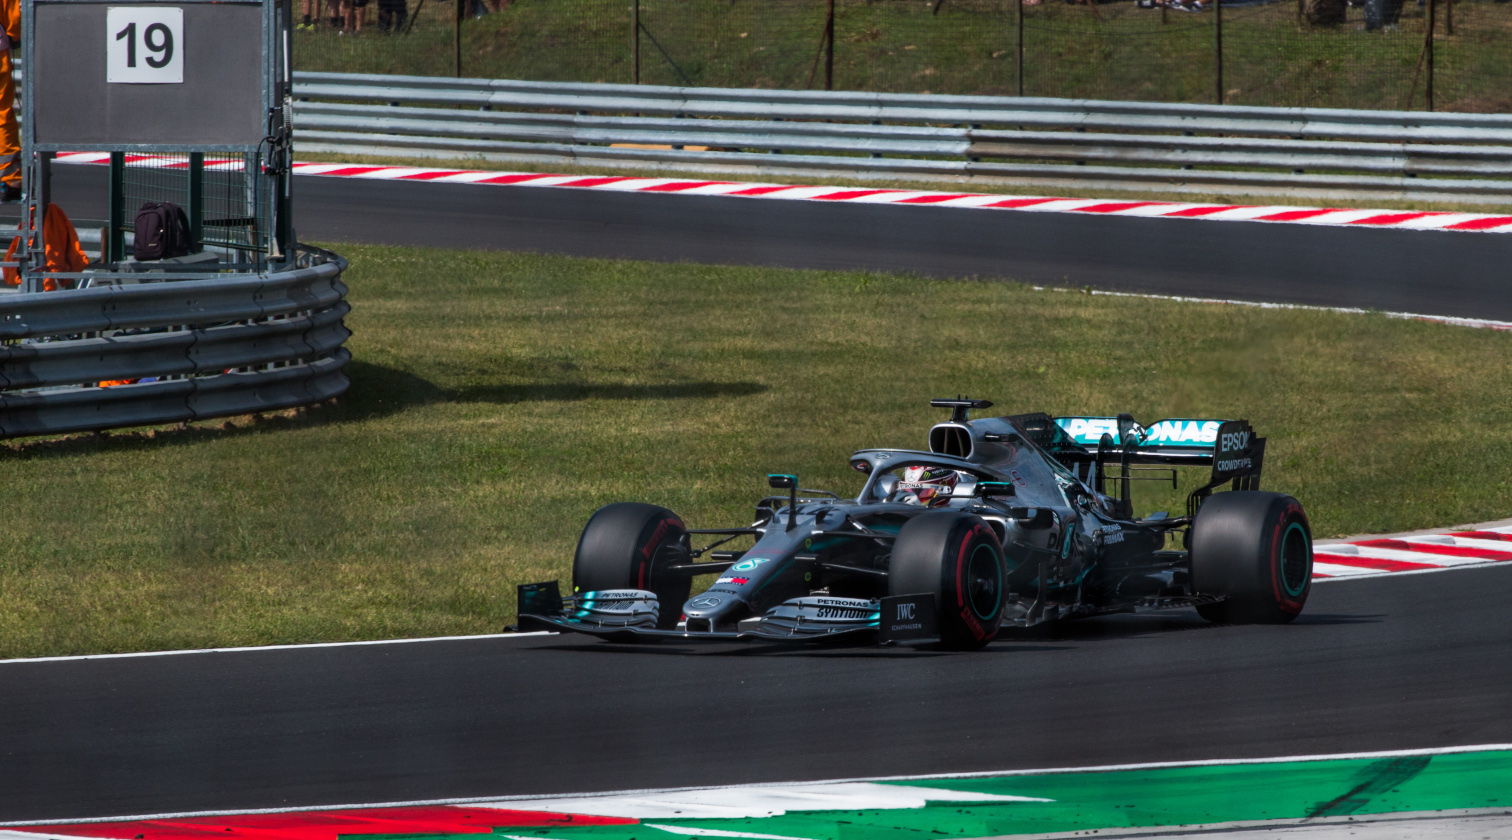 Lewis Hamilton driving his Mercedes